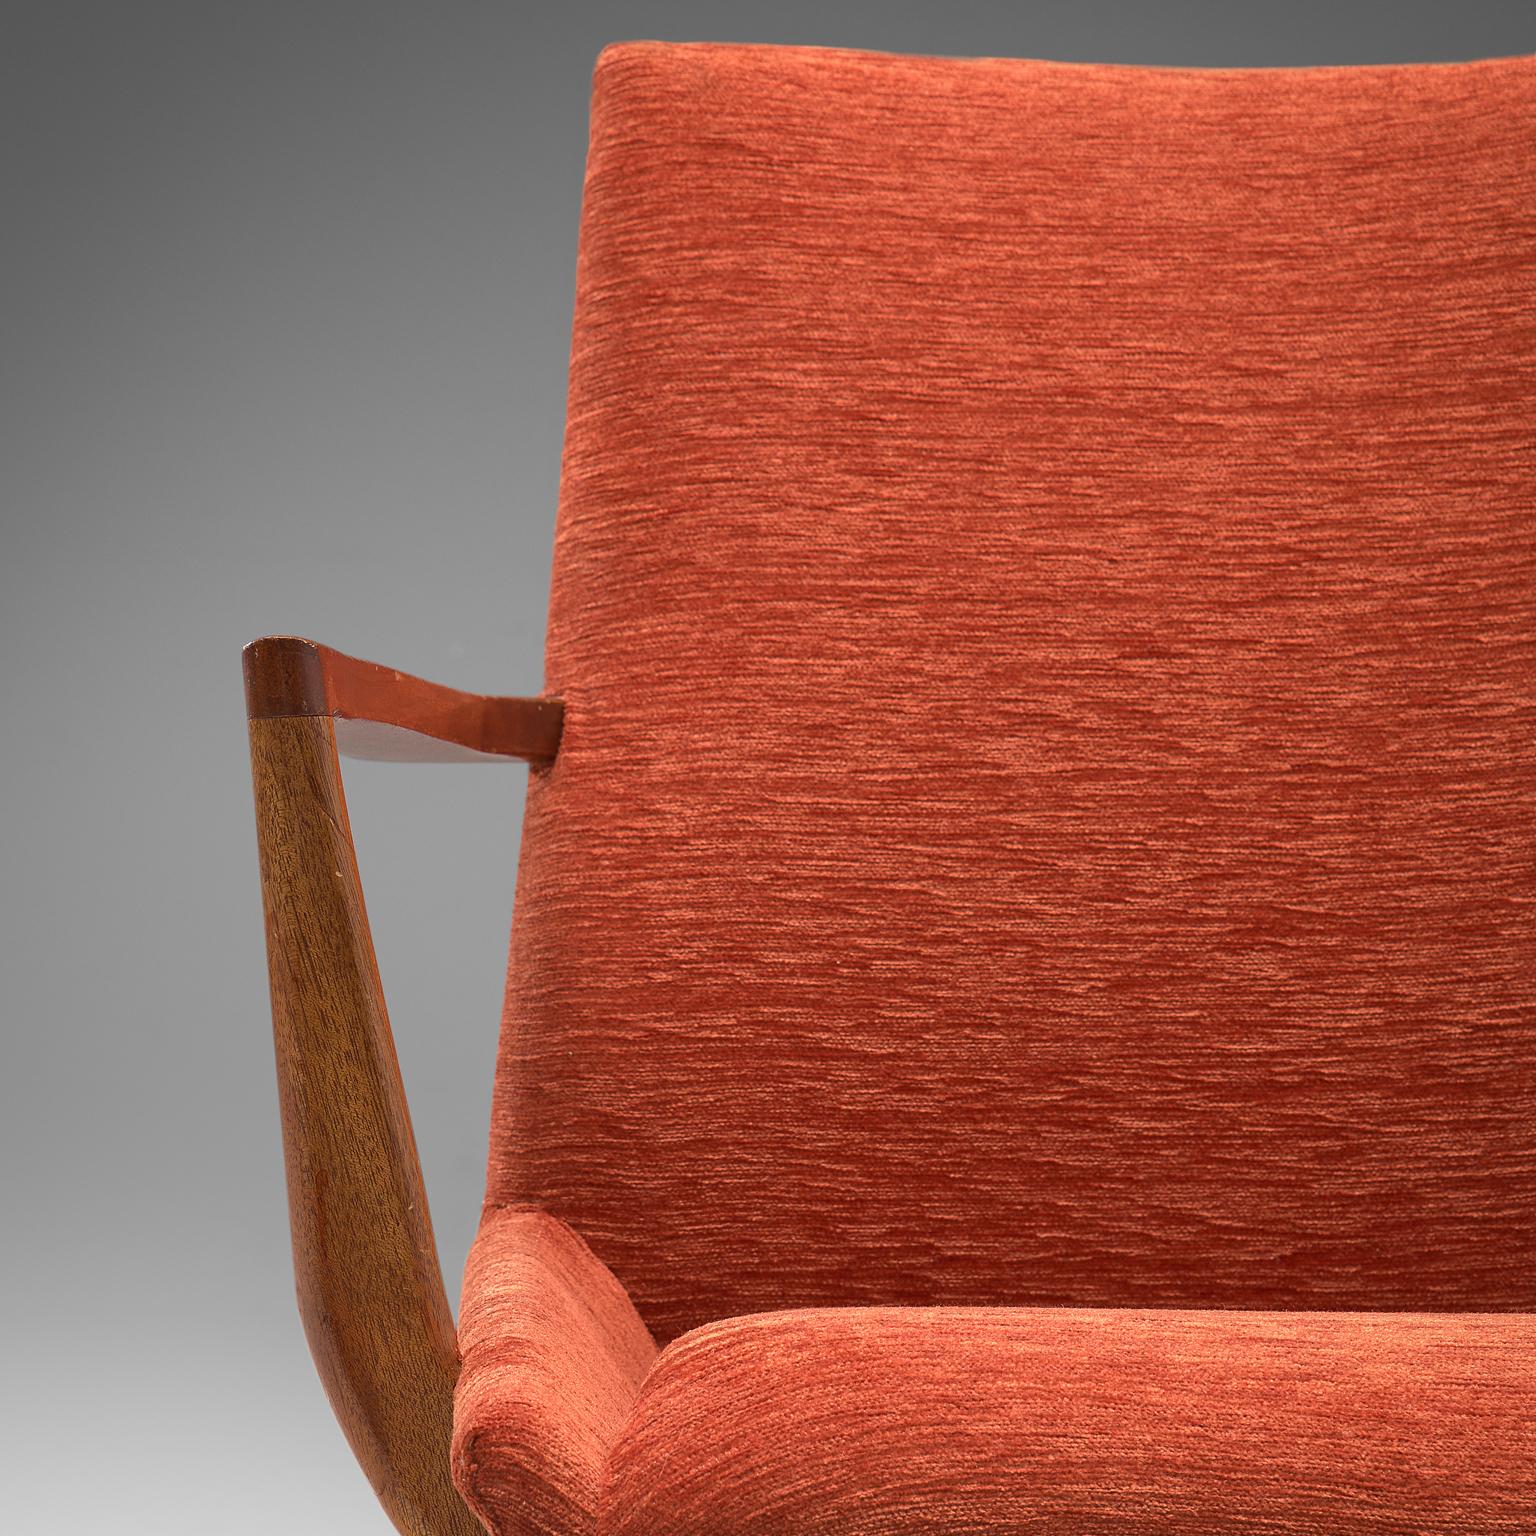 Velvet Scandinavian Armchairs in Teak and Red/Orange Cord Upholstery